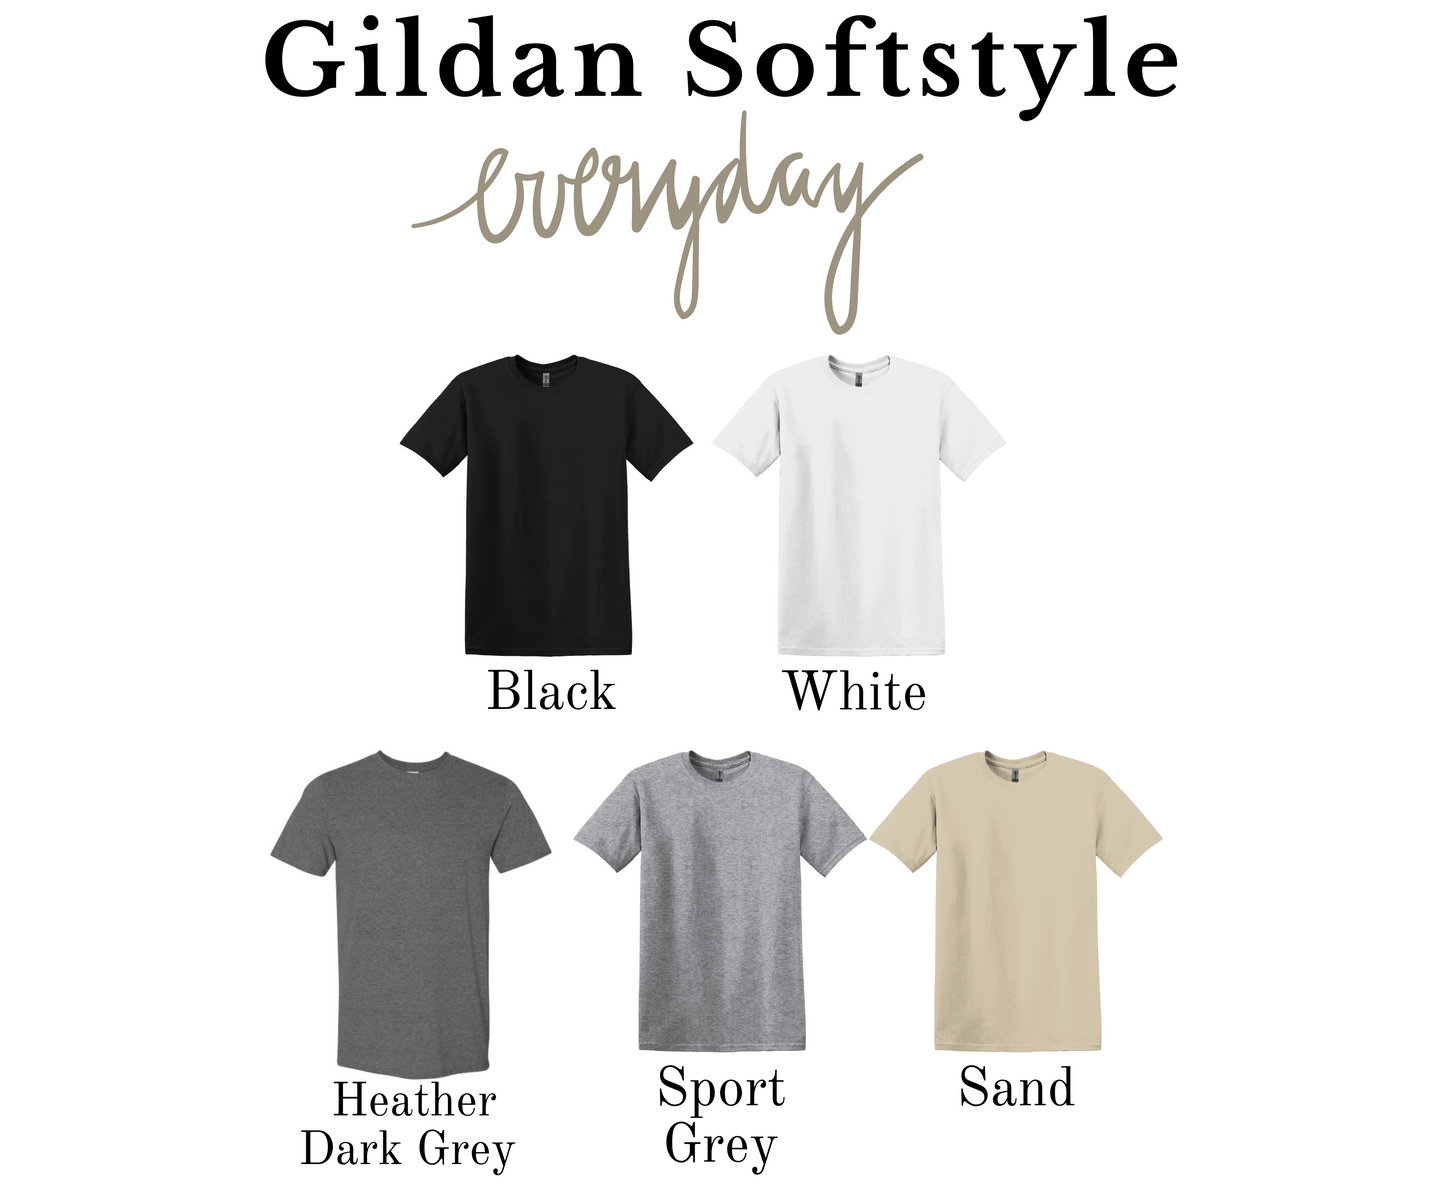 Jesus Is Coming Back Gildan Softstyle T-shirt or Sweatshirt